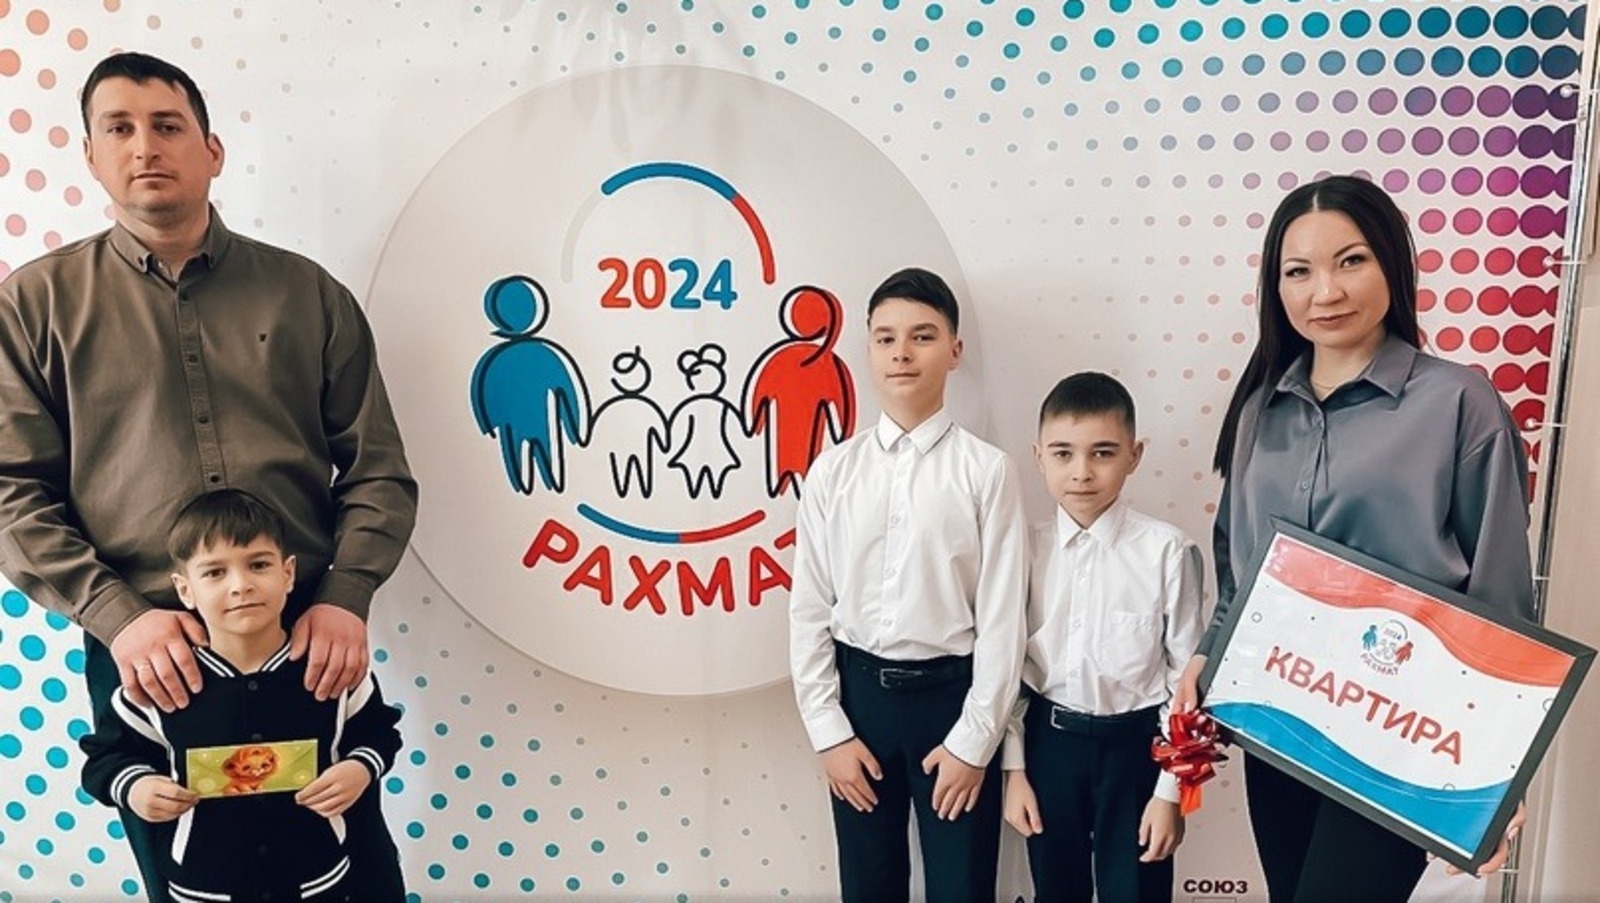 Семья из Башкирии выиграла квартиру по акции «Рахмат»